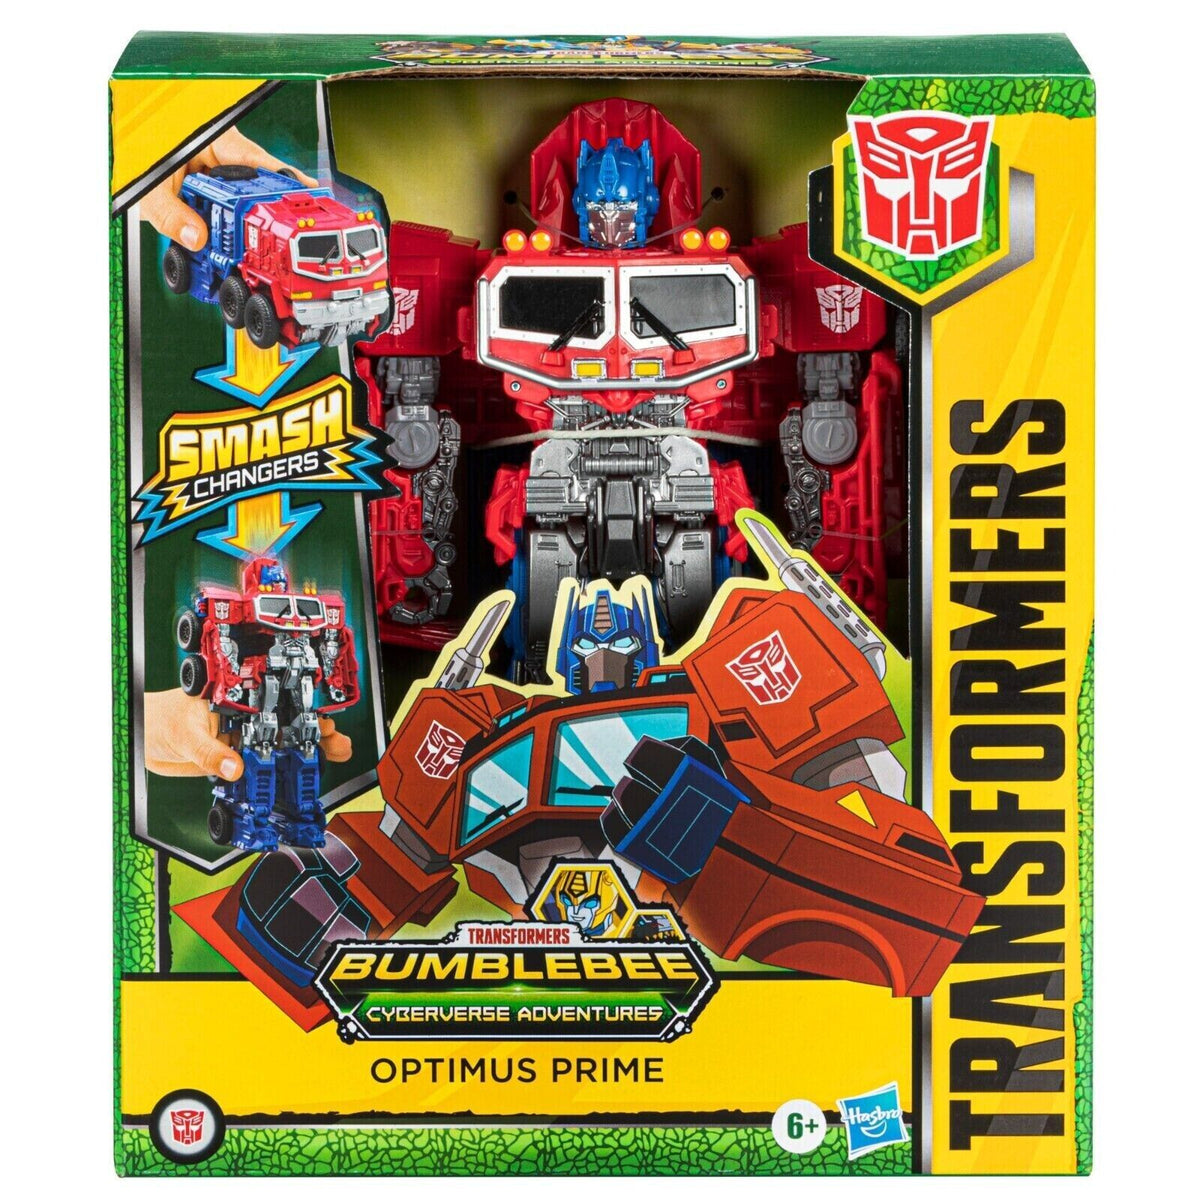 Transformers Cyberverse Adventures Smash Changers Optimus Prime